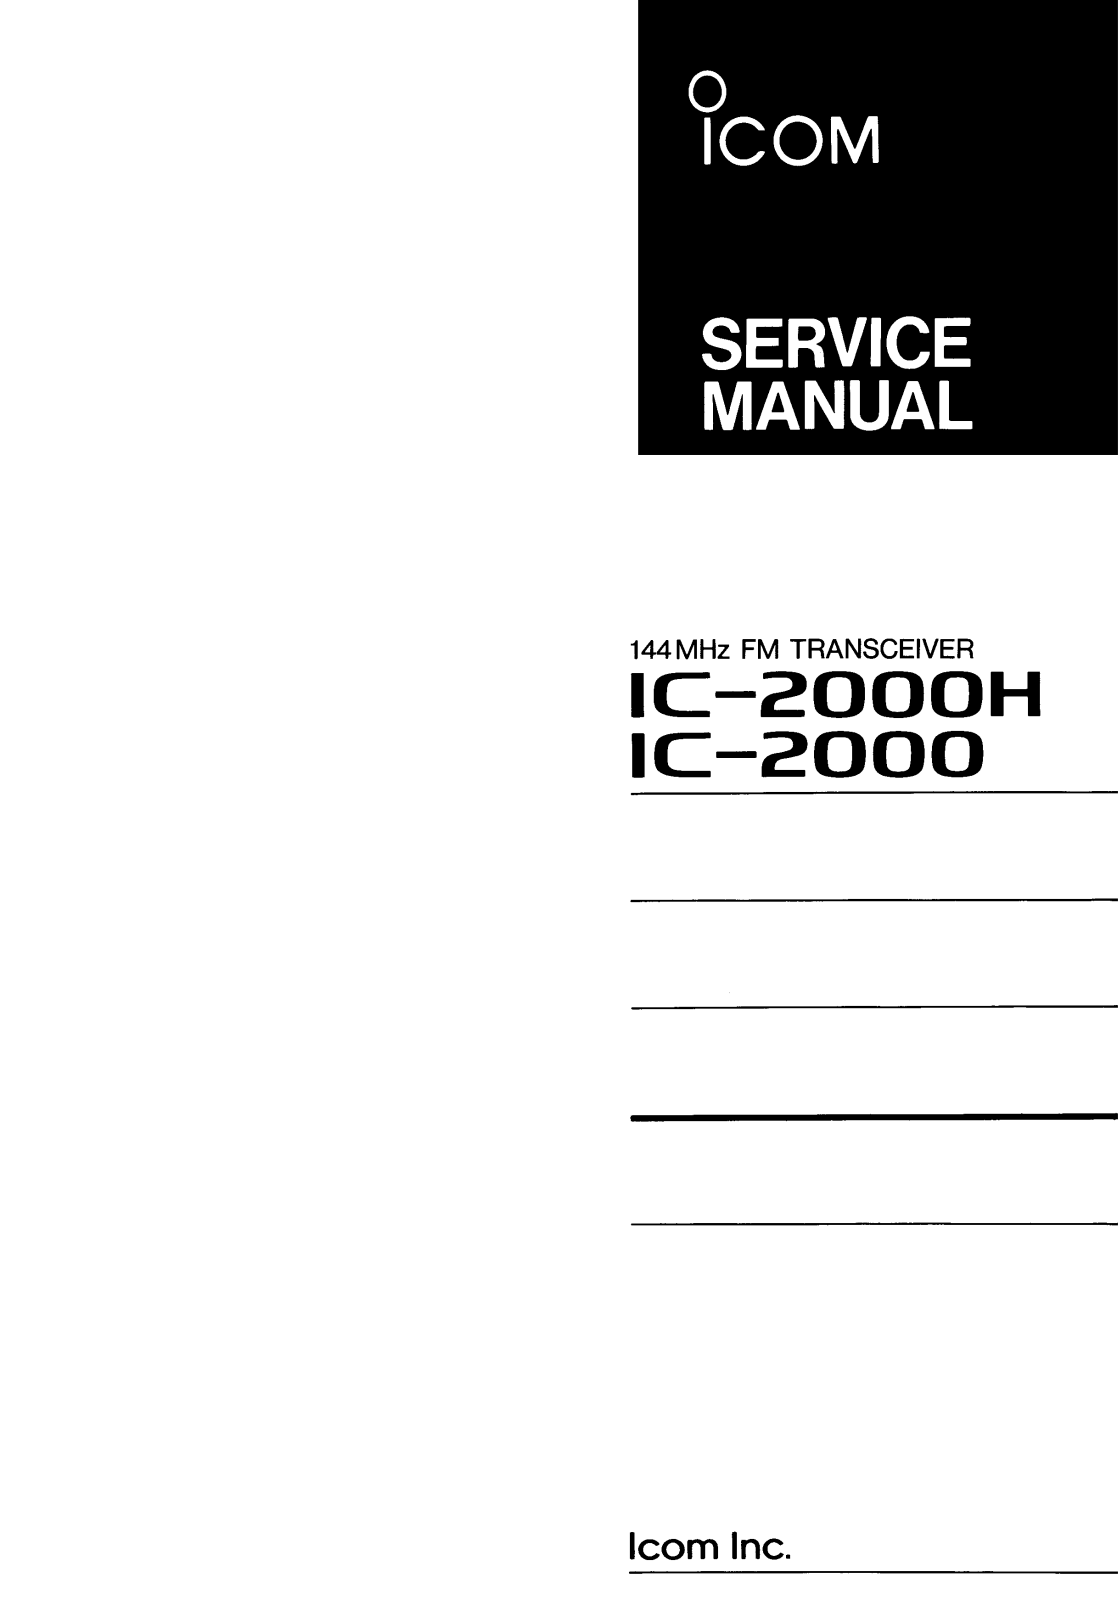 Icom IC-2000H, IC-2000 Service Manual